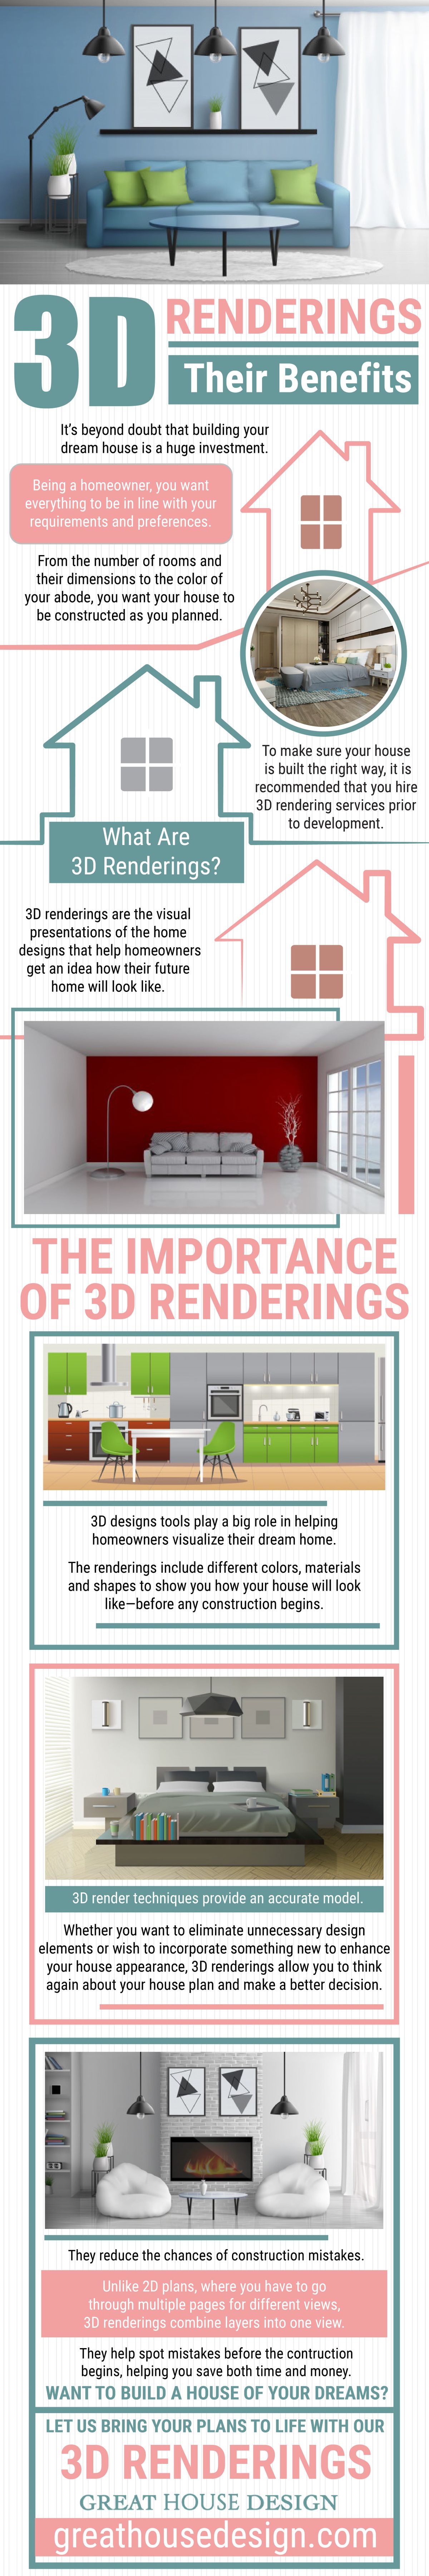 Benefits Of 3D Renderings Infographic